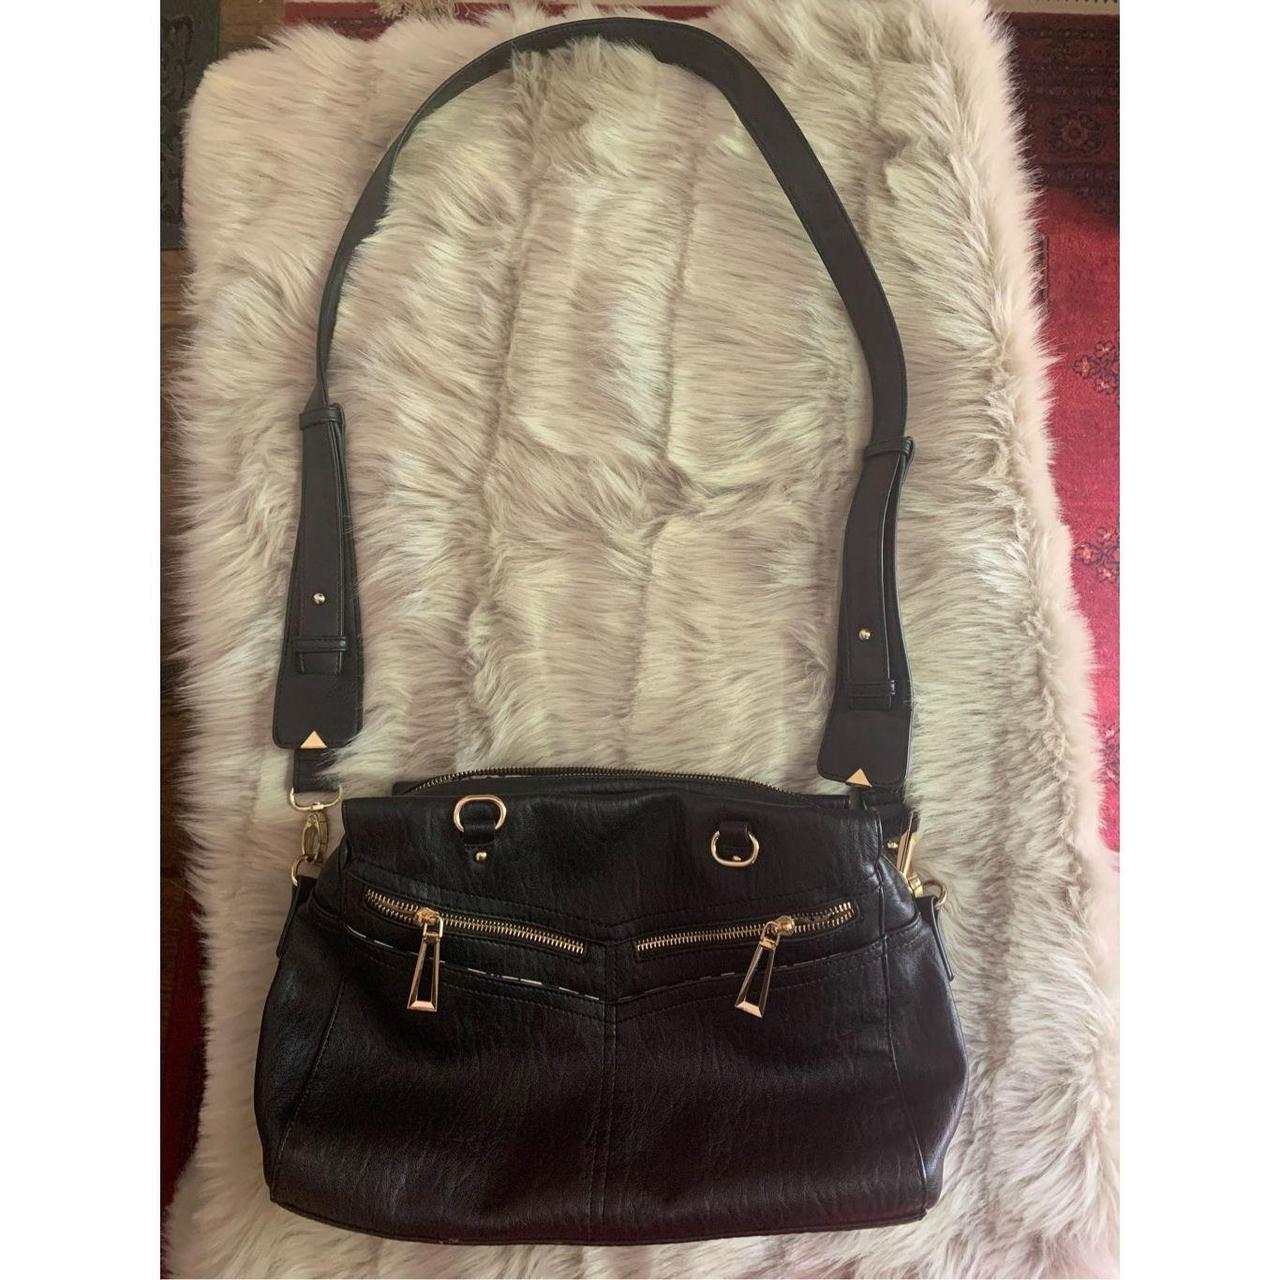 🤩Jessica Simpson Women's Phoebe Crossbody Bag | eBay